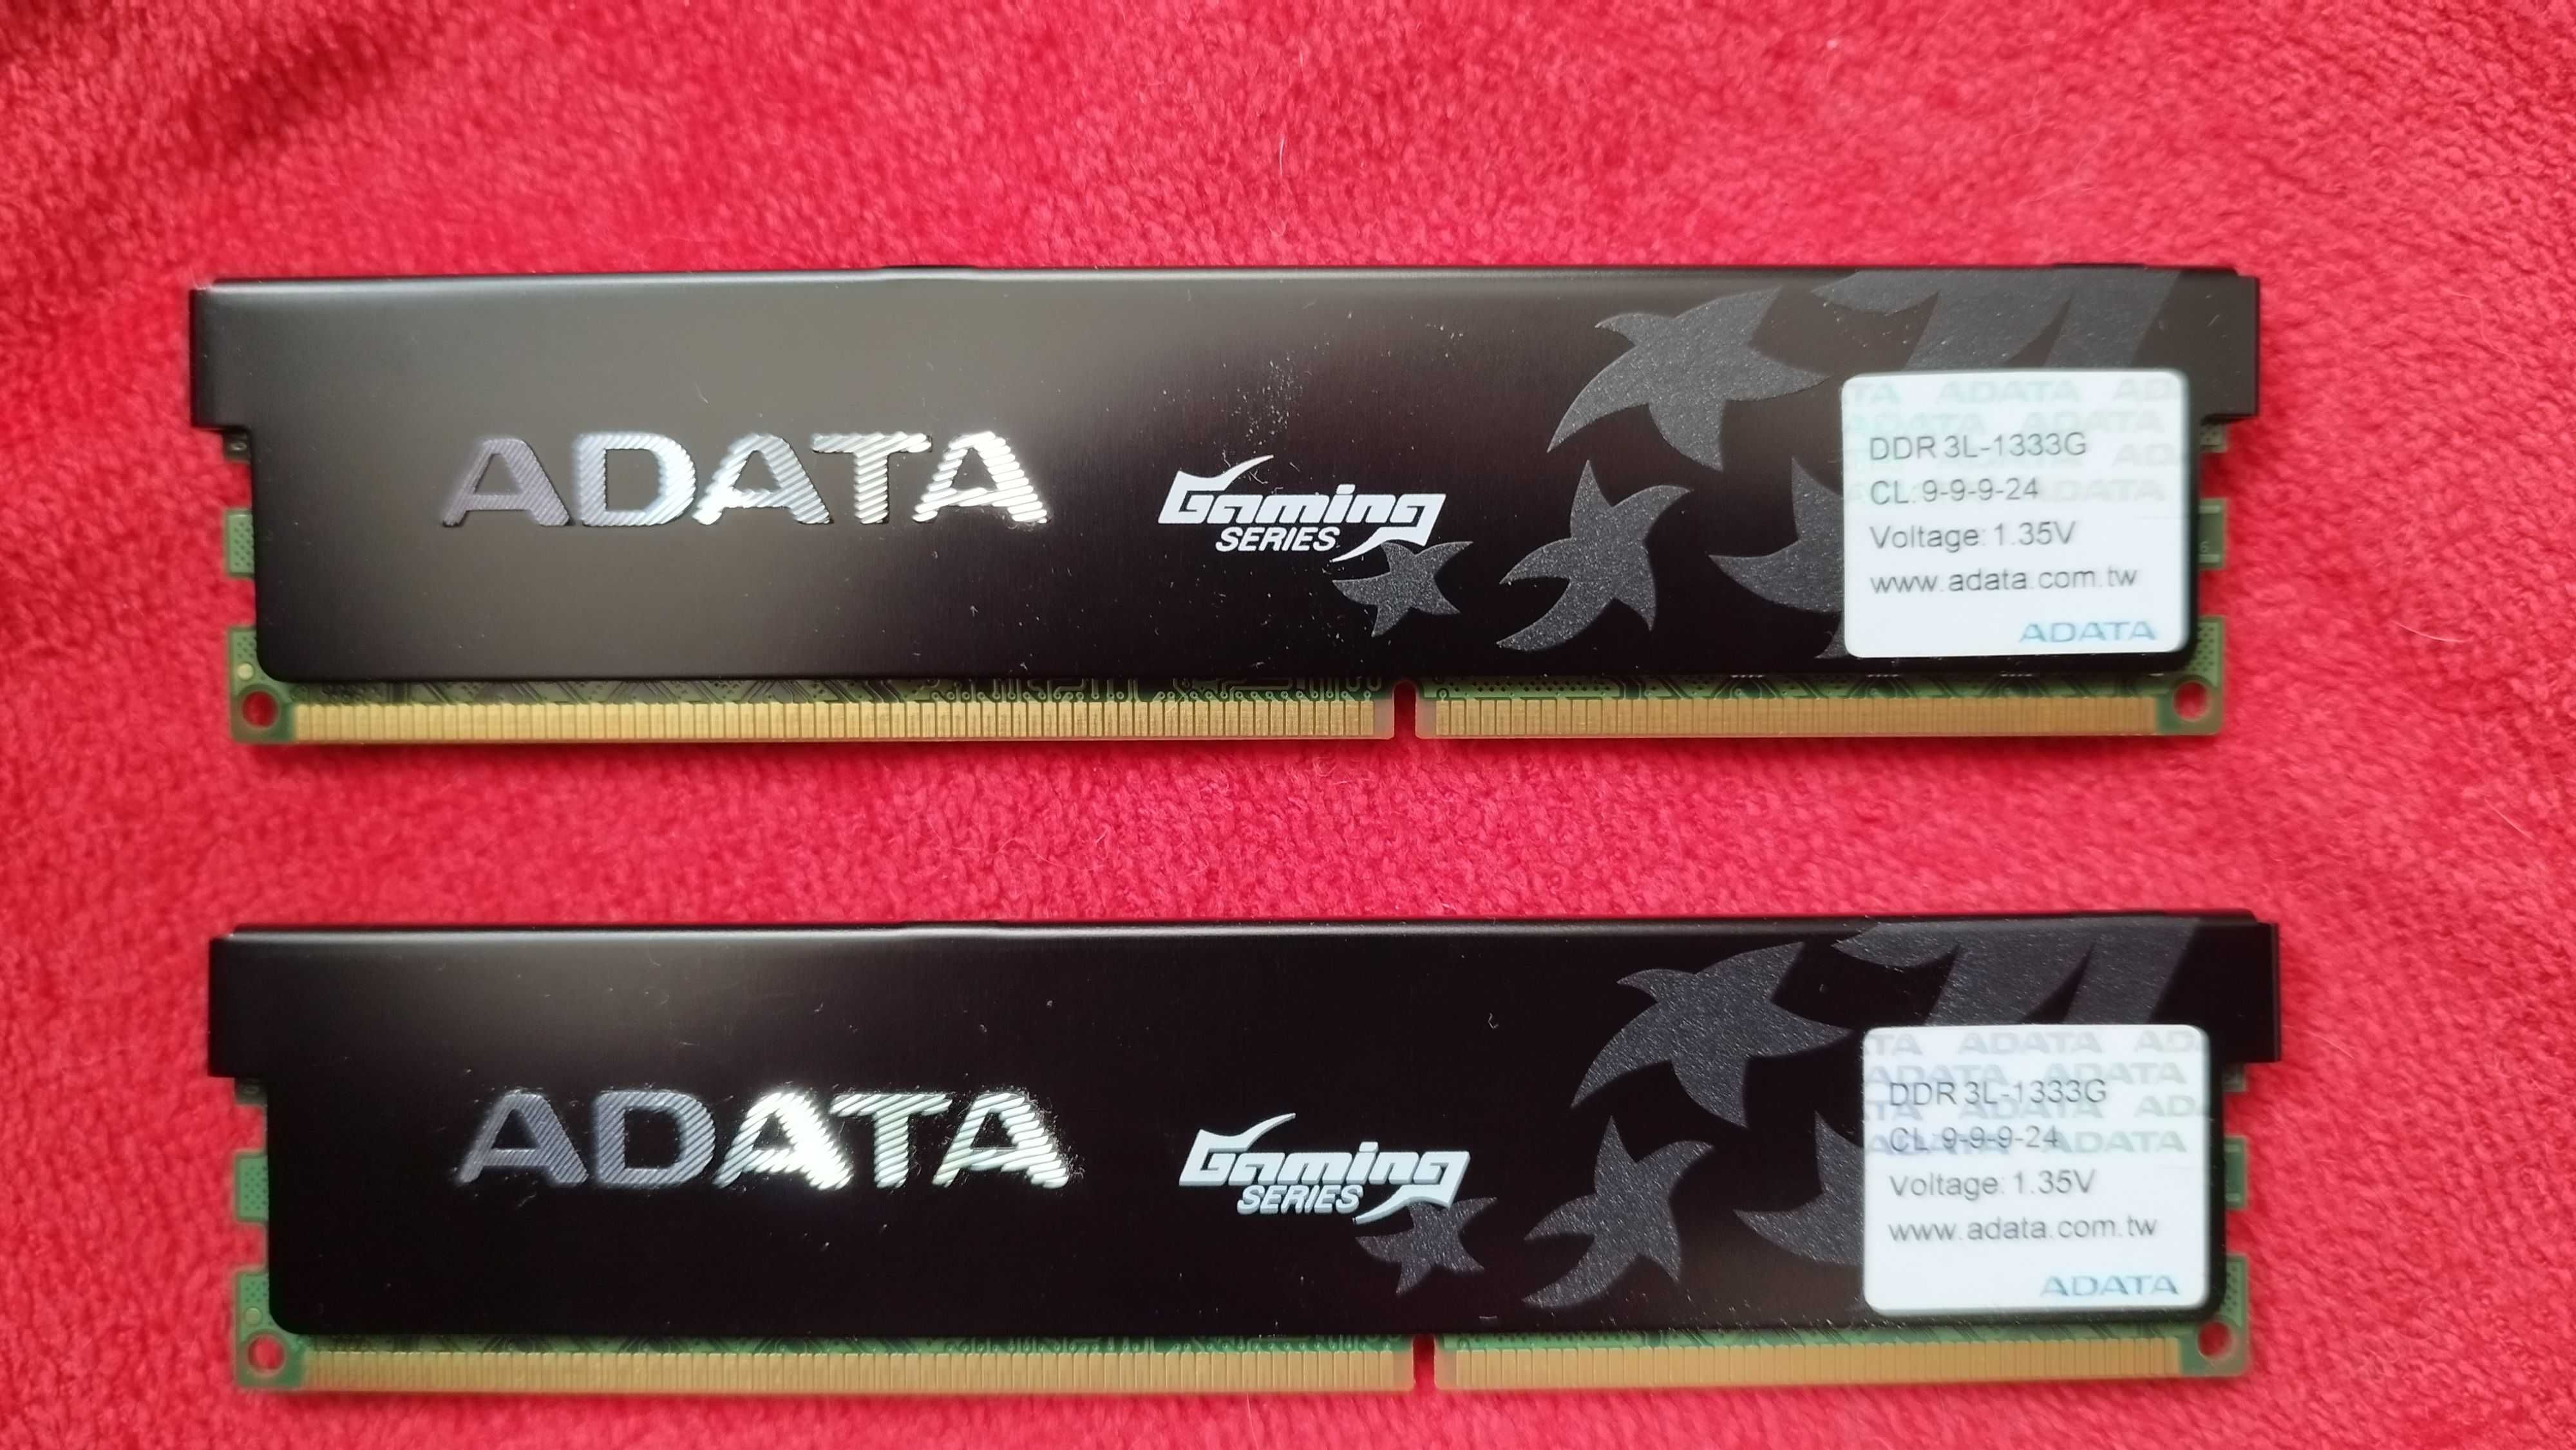 Intel 3570K + ASrock Z77 Extreme4 + 12GB RAM DDR3 + Scythe Ninja Plus!